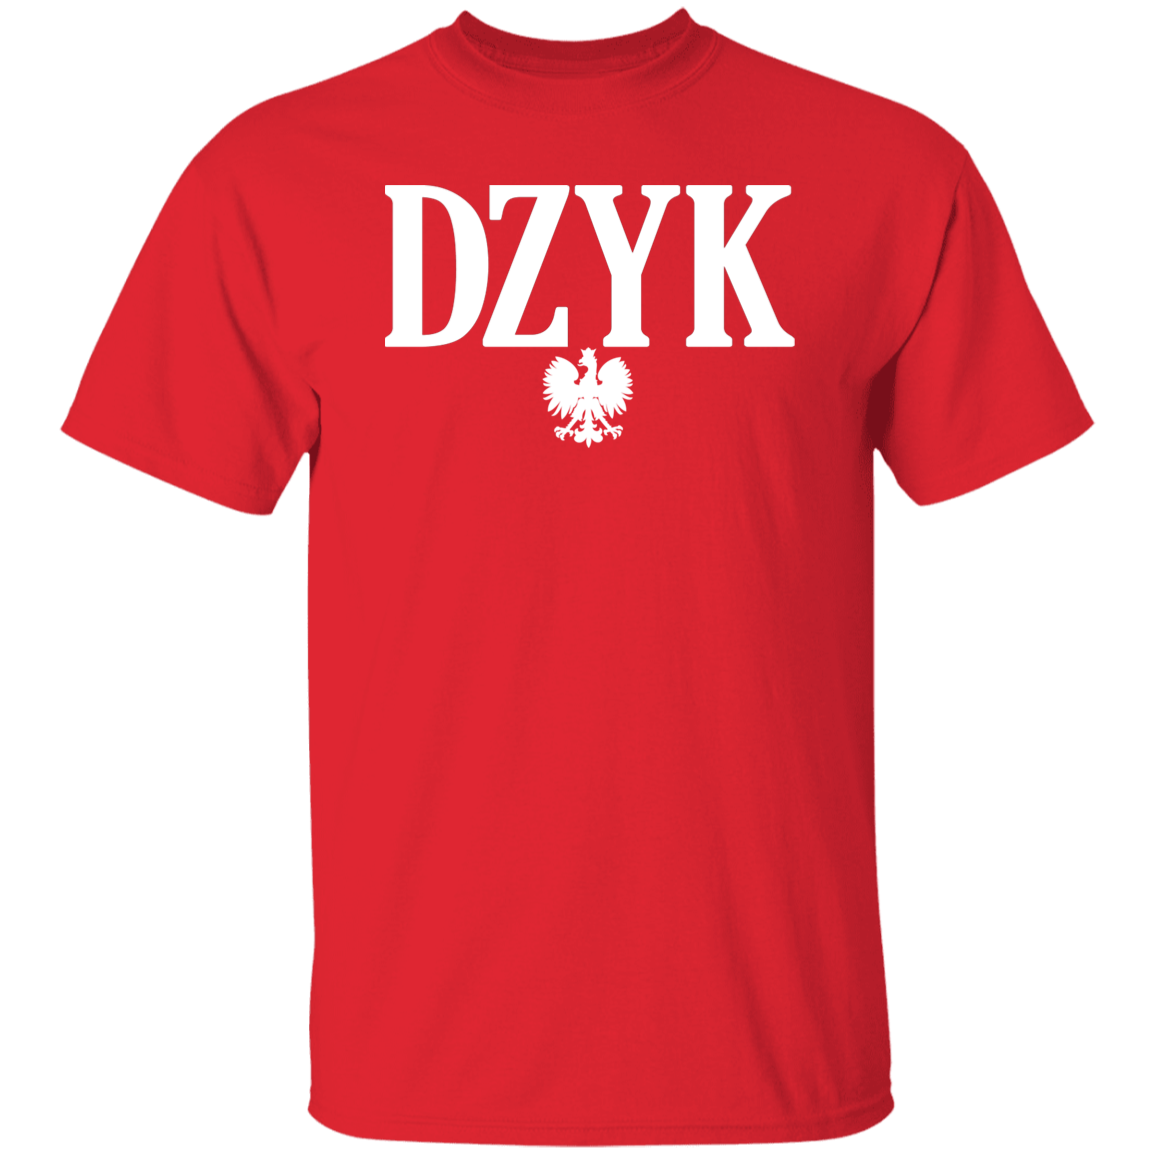 DZYK Polish Surname Ending Apparel CustomCat G500 5.3 oz. T-Shirt Red S